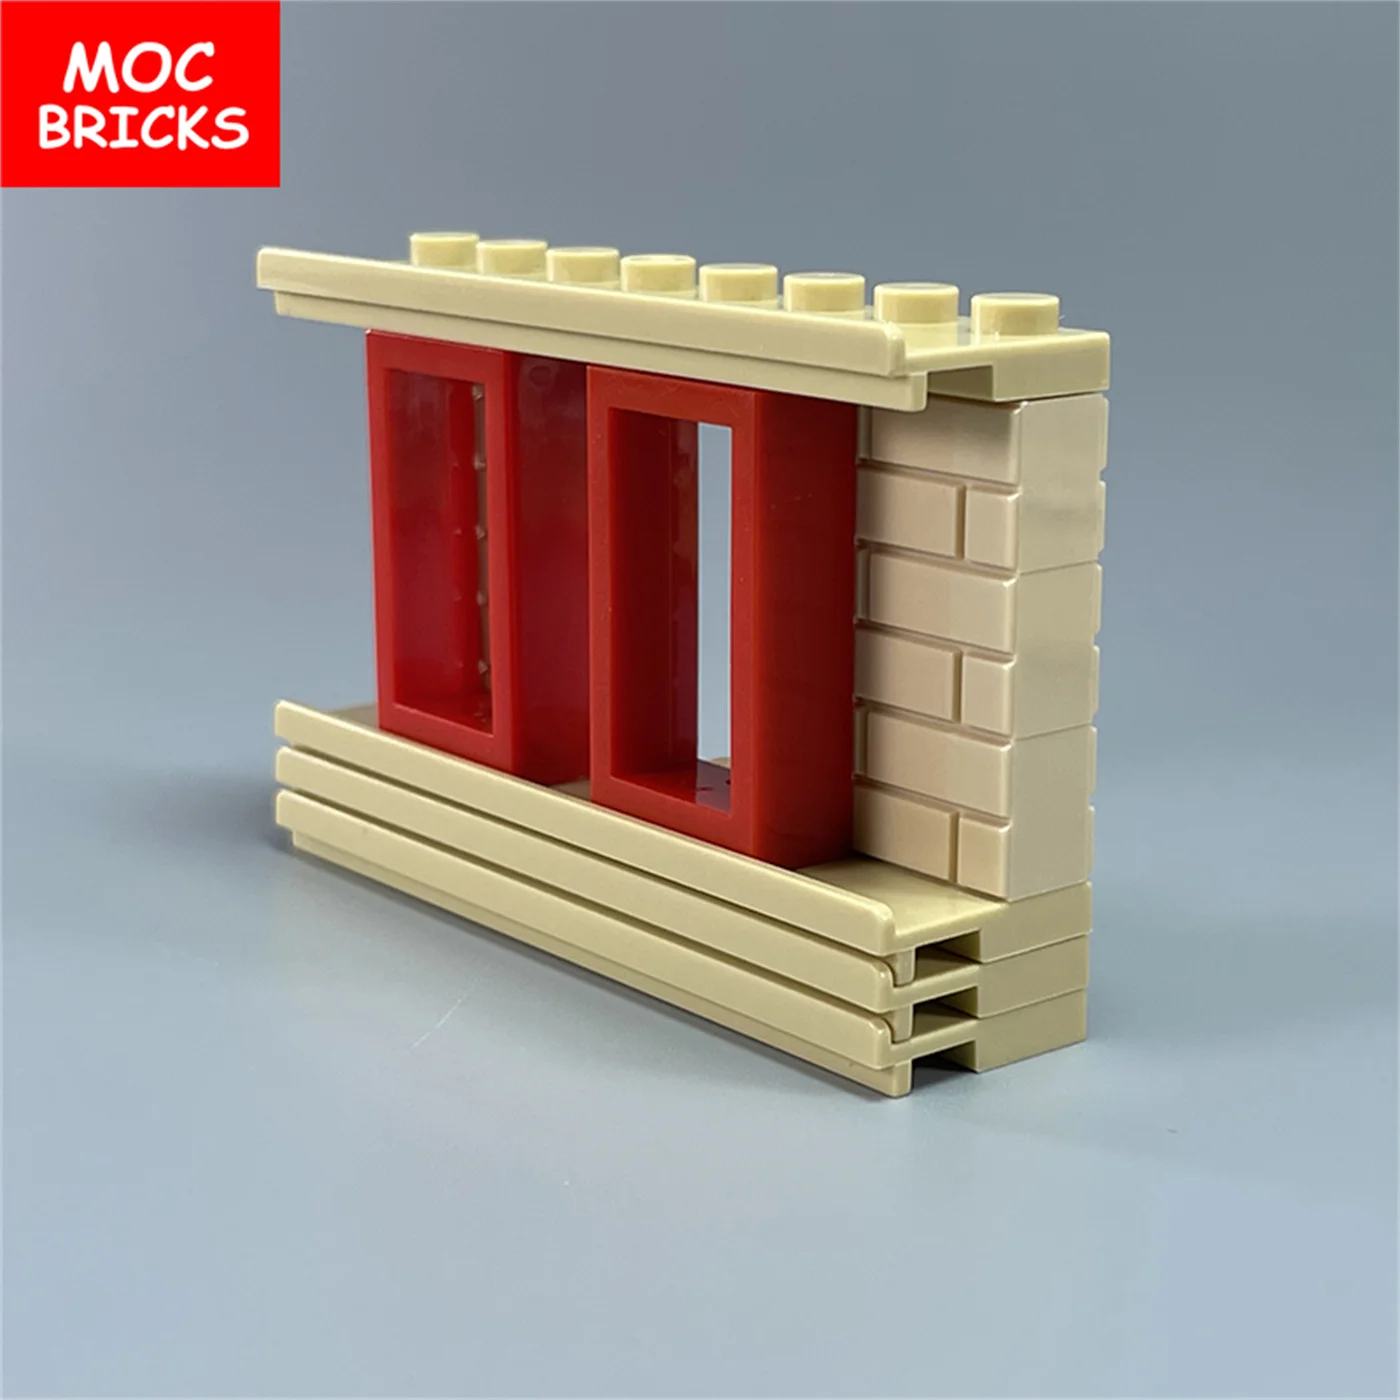 MOC Factory™ 89315 Doors Monsters brick set